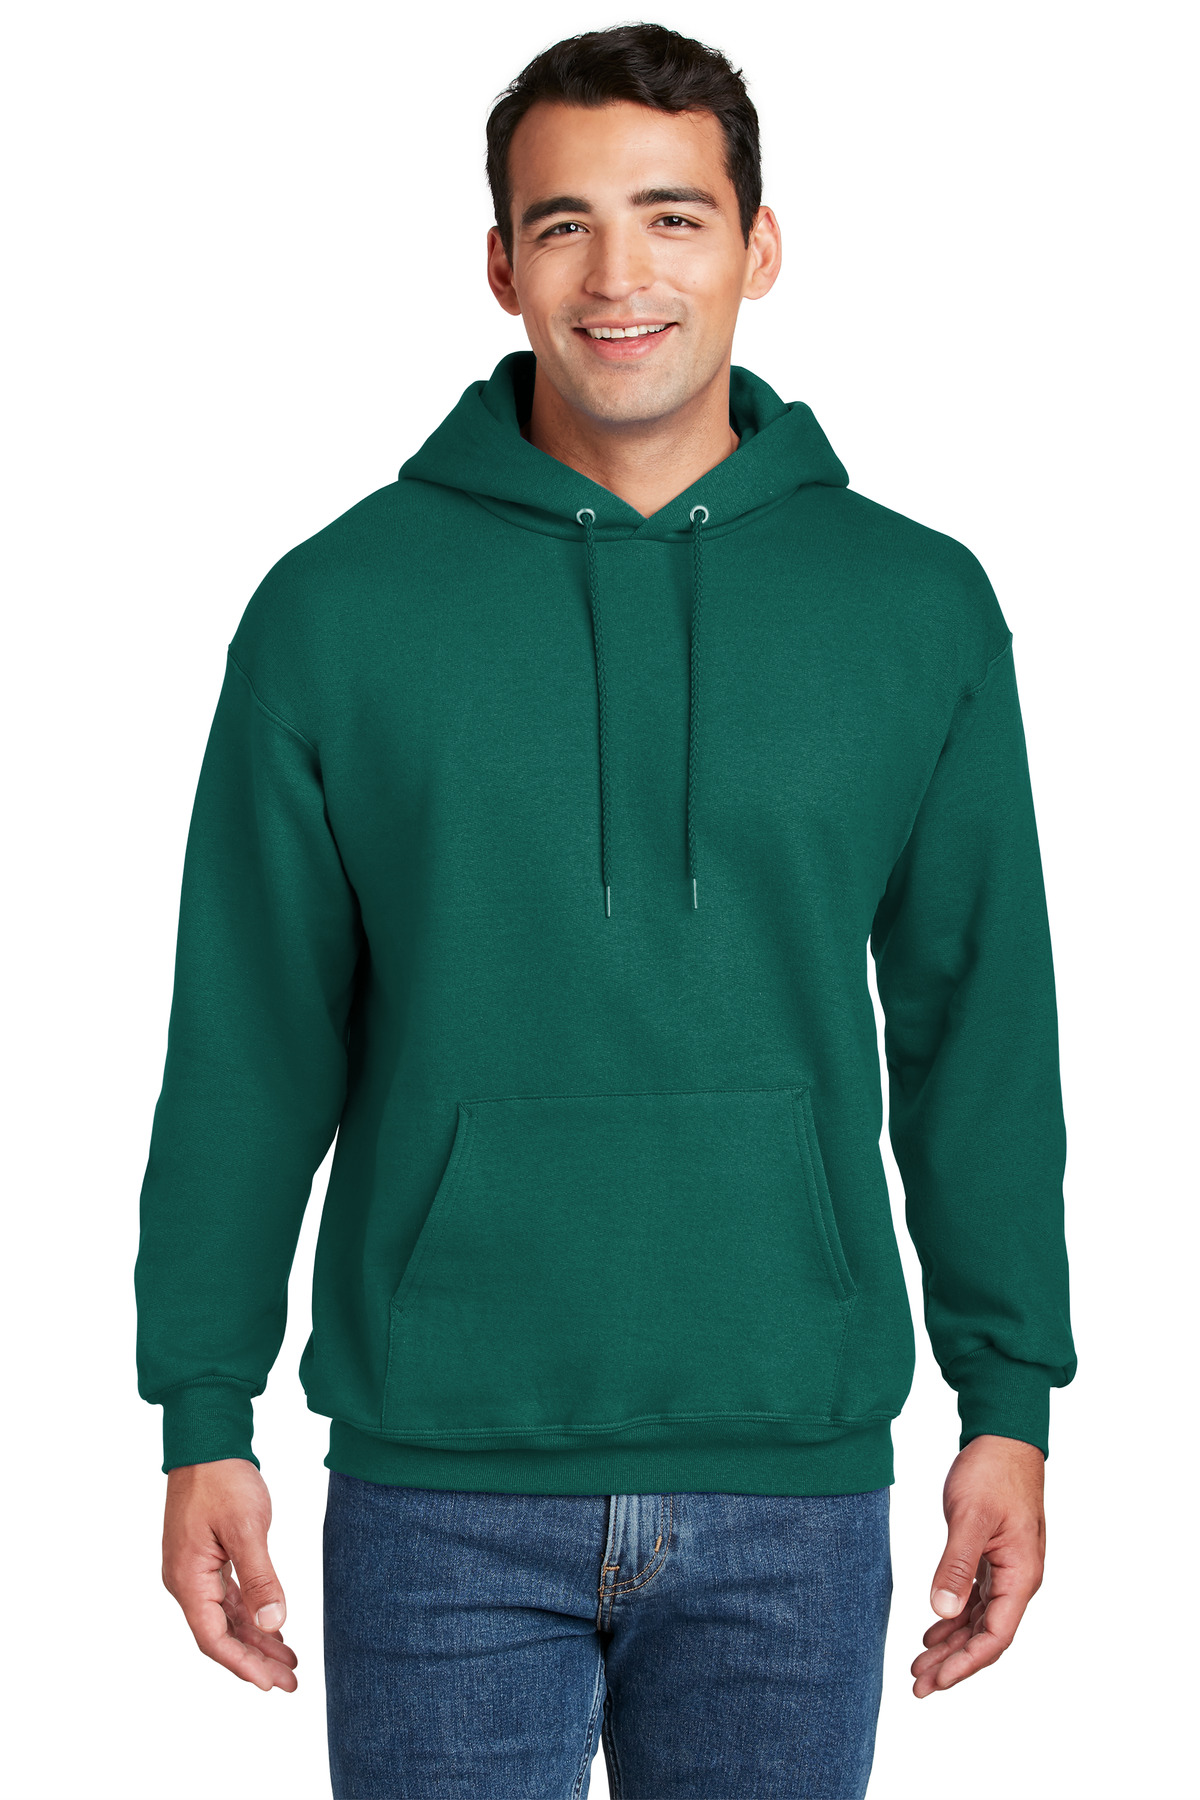 Hanes Ultimate Cotton - Pullover Hooded Sweatshirt - F170